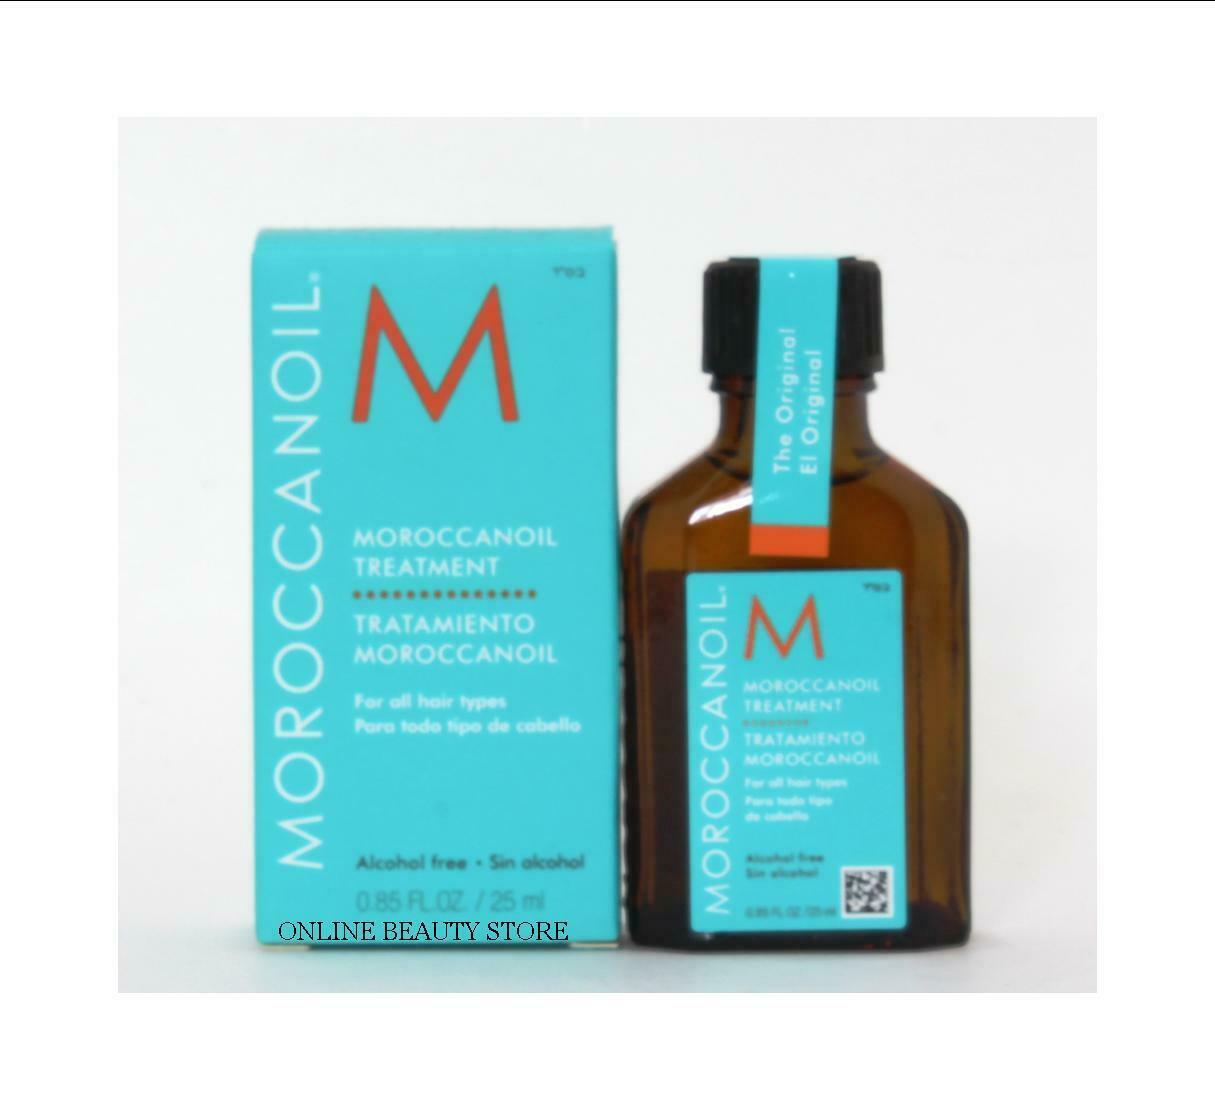 Moroccanoil Treatment Original 0.85 oz, All hair Type